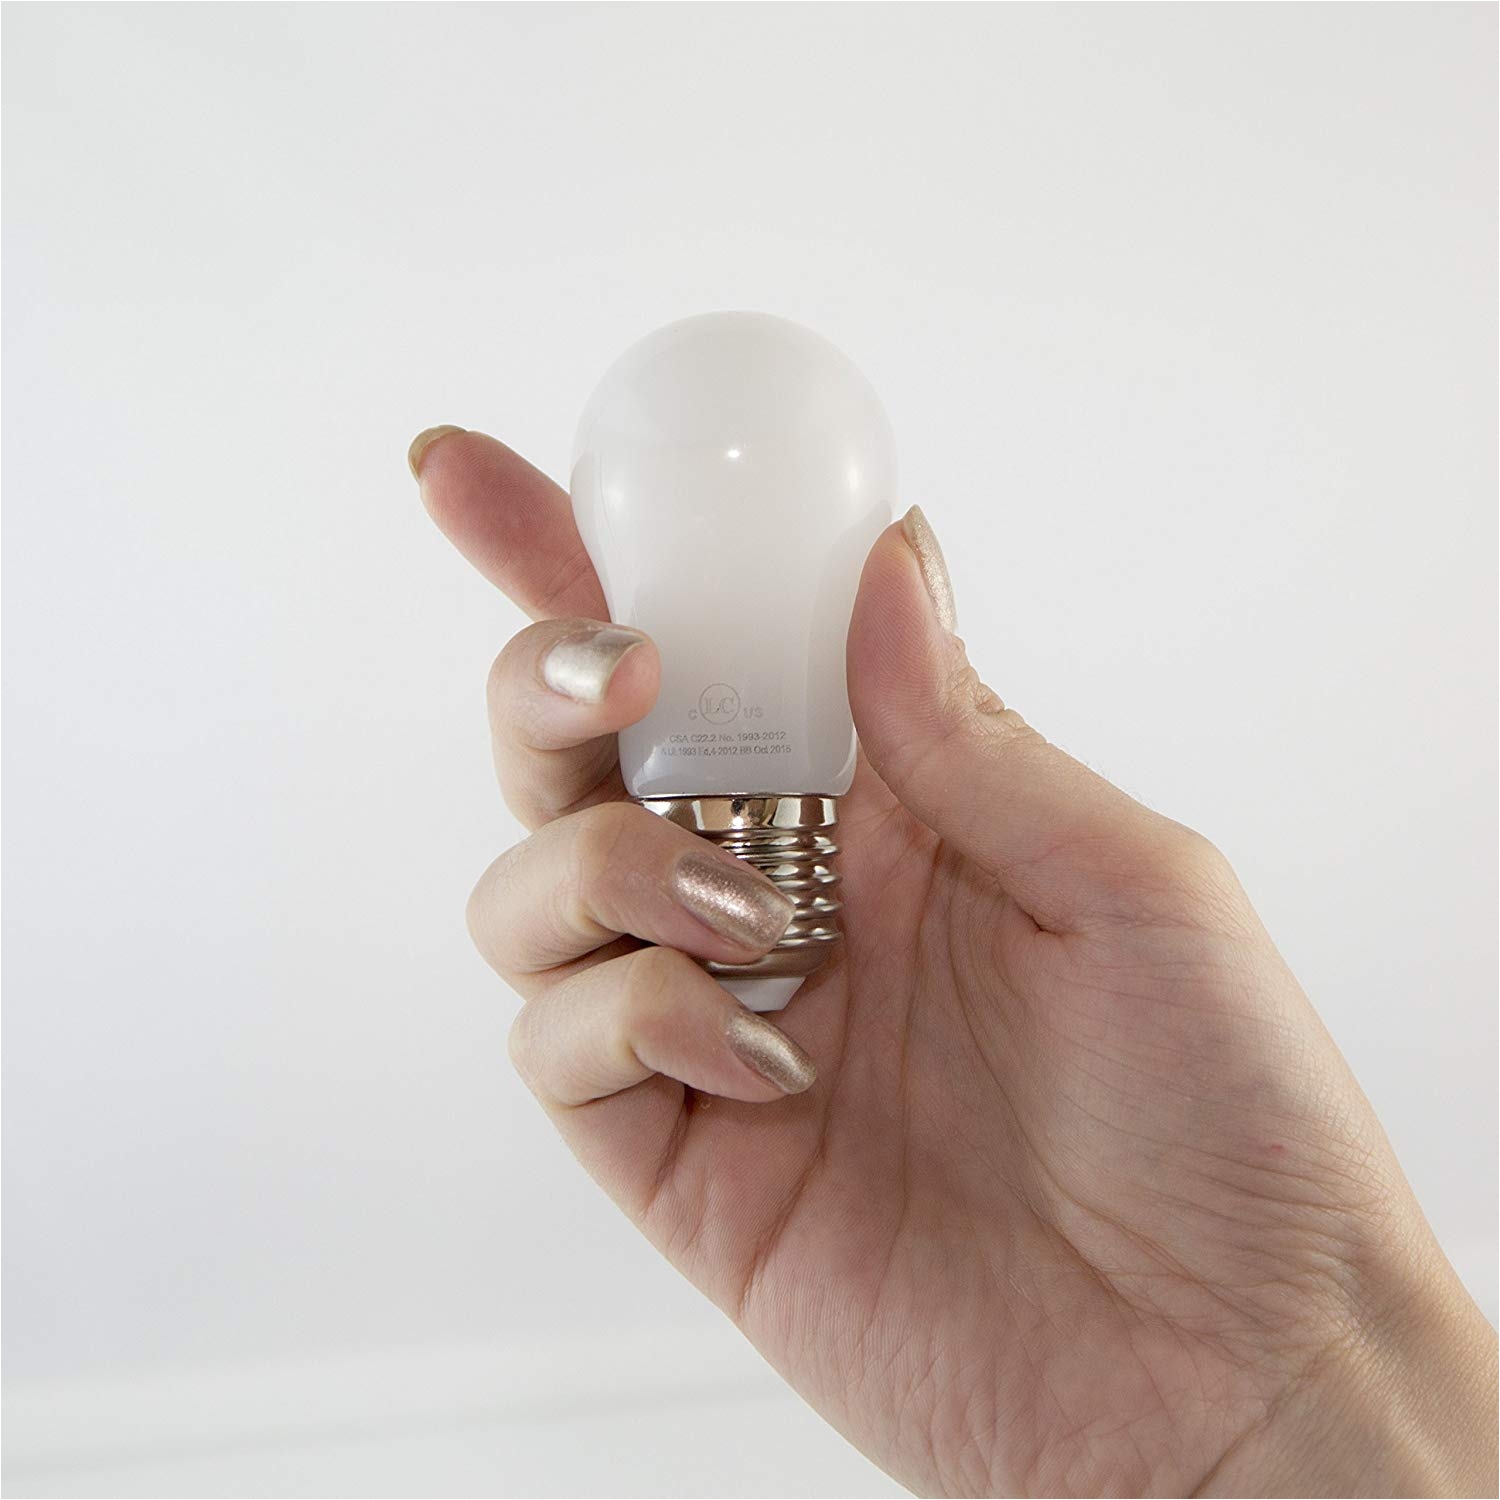 amazon com sunasu energy a15 led light bulbs liquid cooled 6 watt industrial scientific